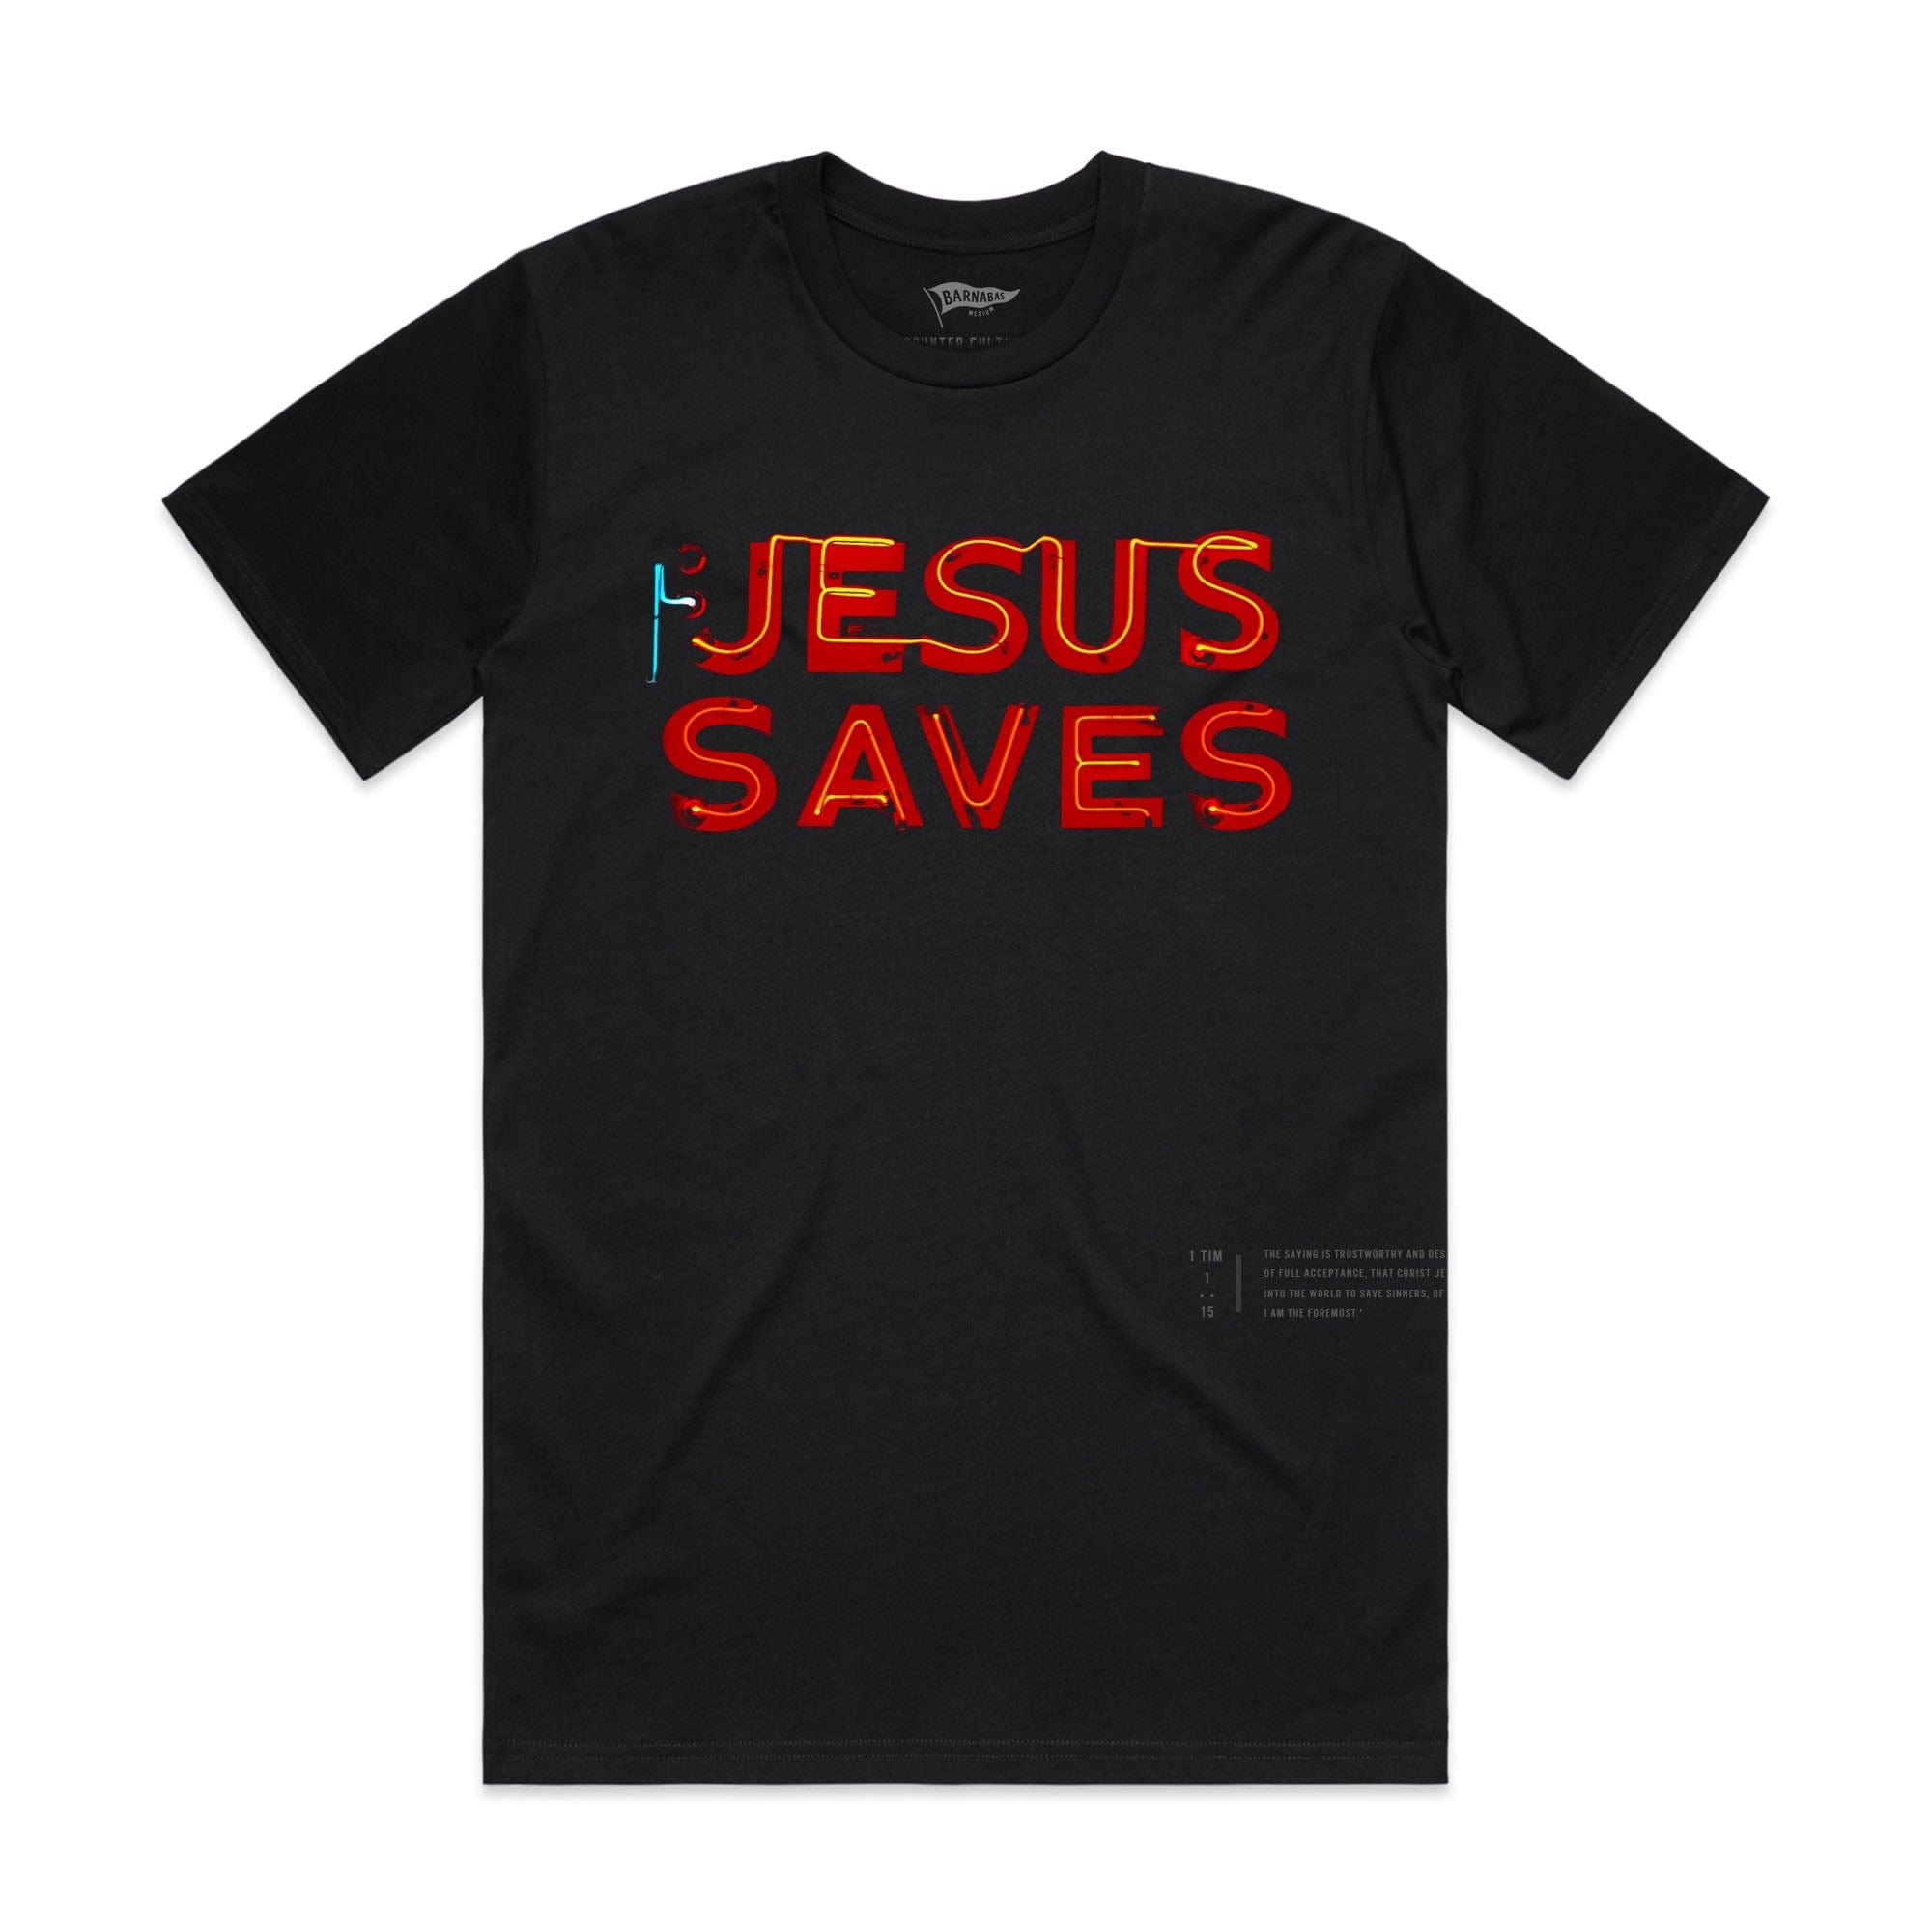 Barnabas Clothing Co. Shirts JESUS SAVES 2.0 Classic Cotton Tee